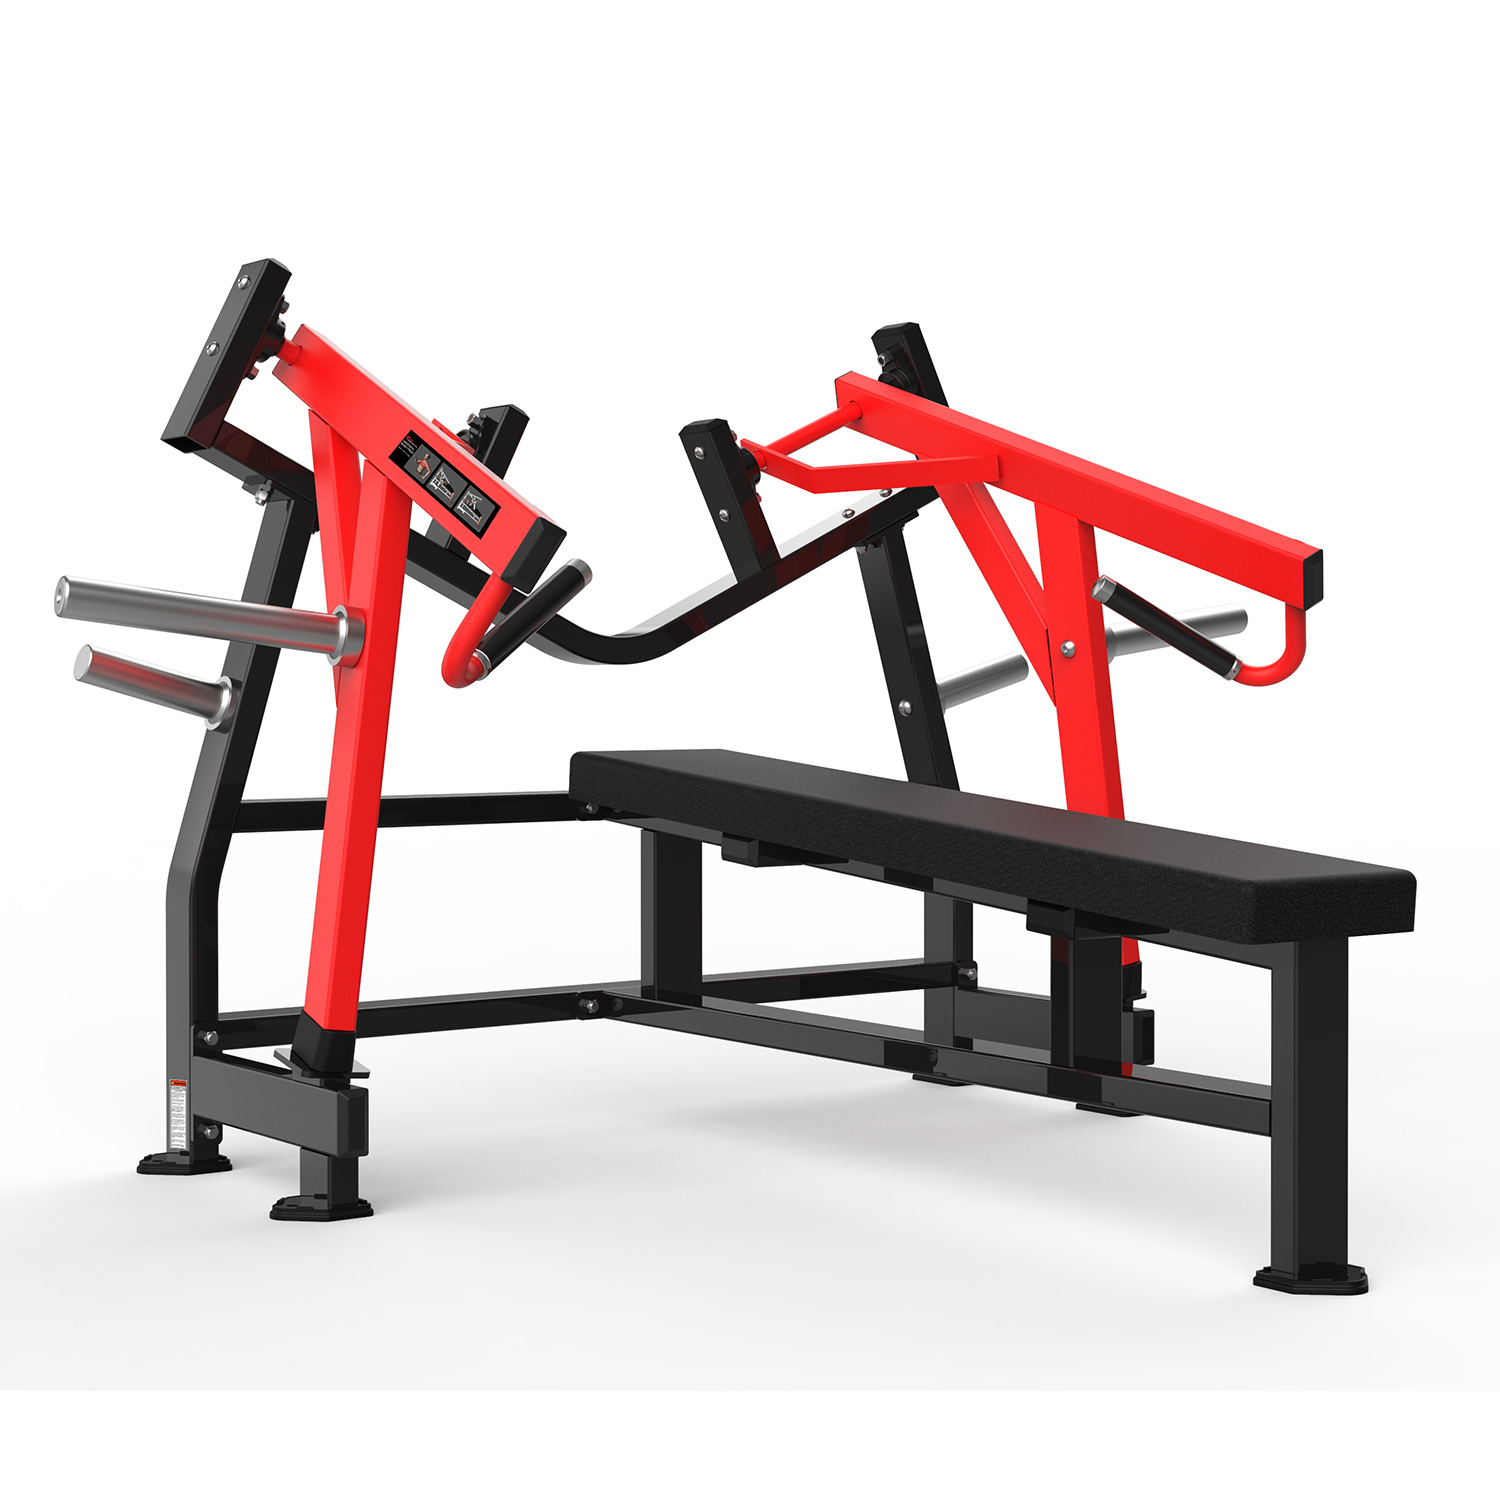 At Home Gym Equipment RS-1007 Horizontal Bench Press